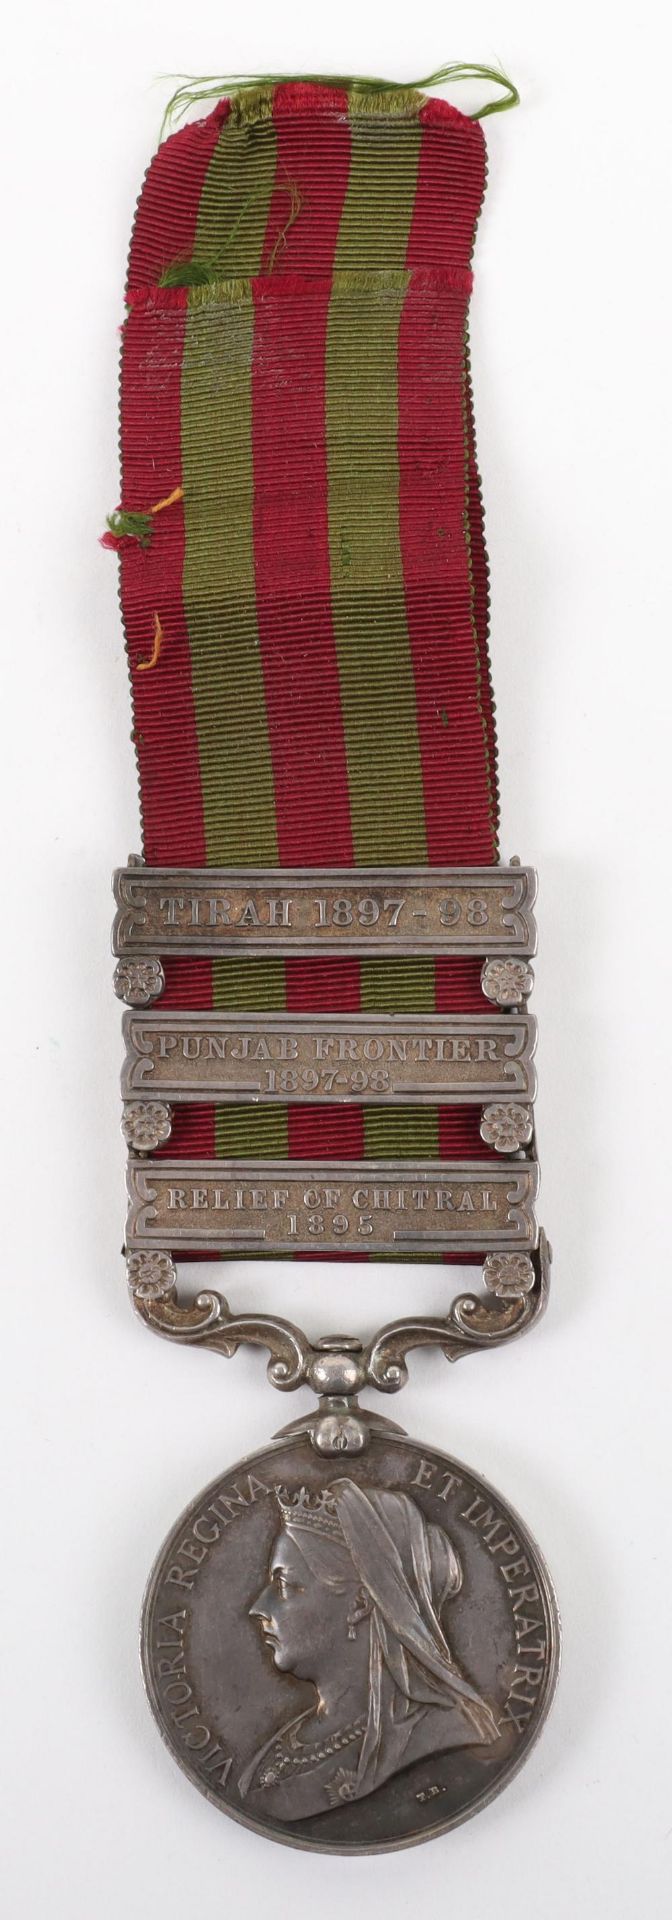 Fine British Officers Indian General Service Medal 1895-1902 4th Gurkhas